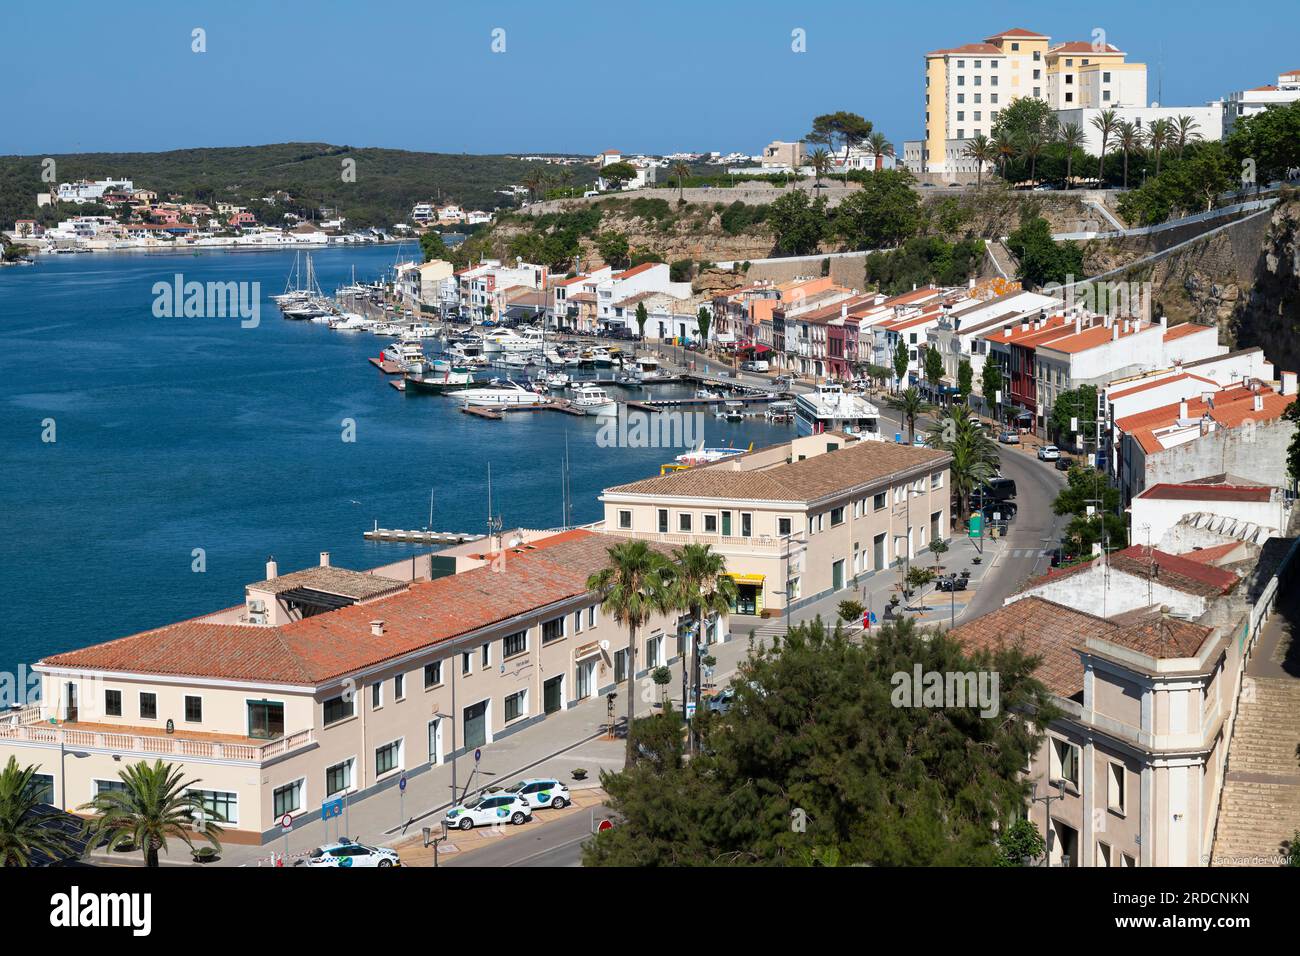 Port de Mao, the port of Mahón on the Spanish island of Menorca. Stock Photo